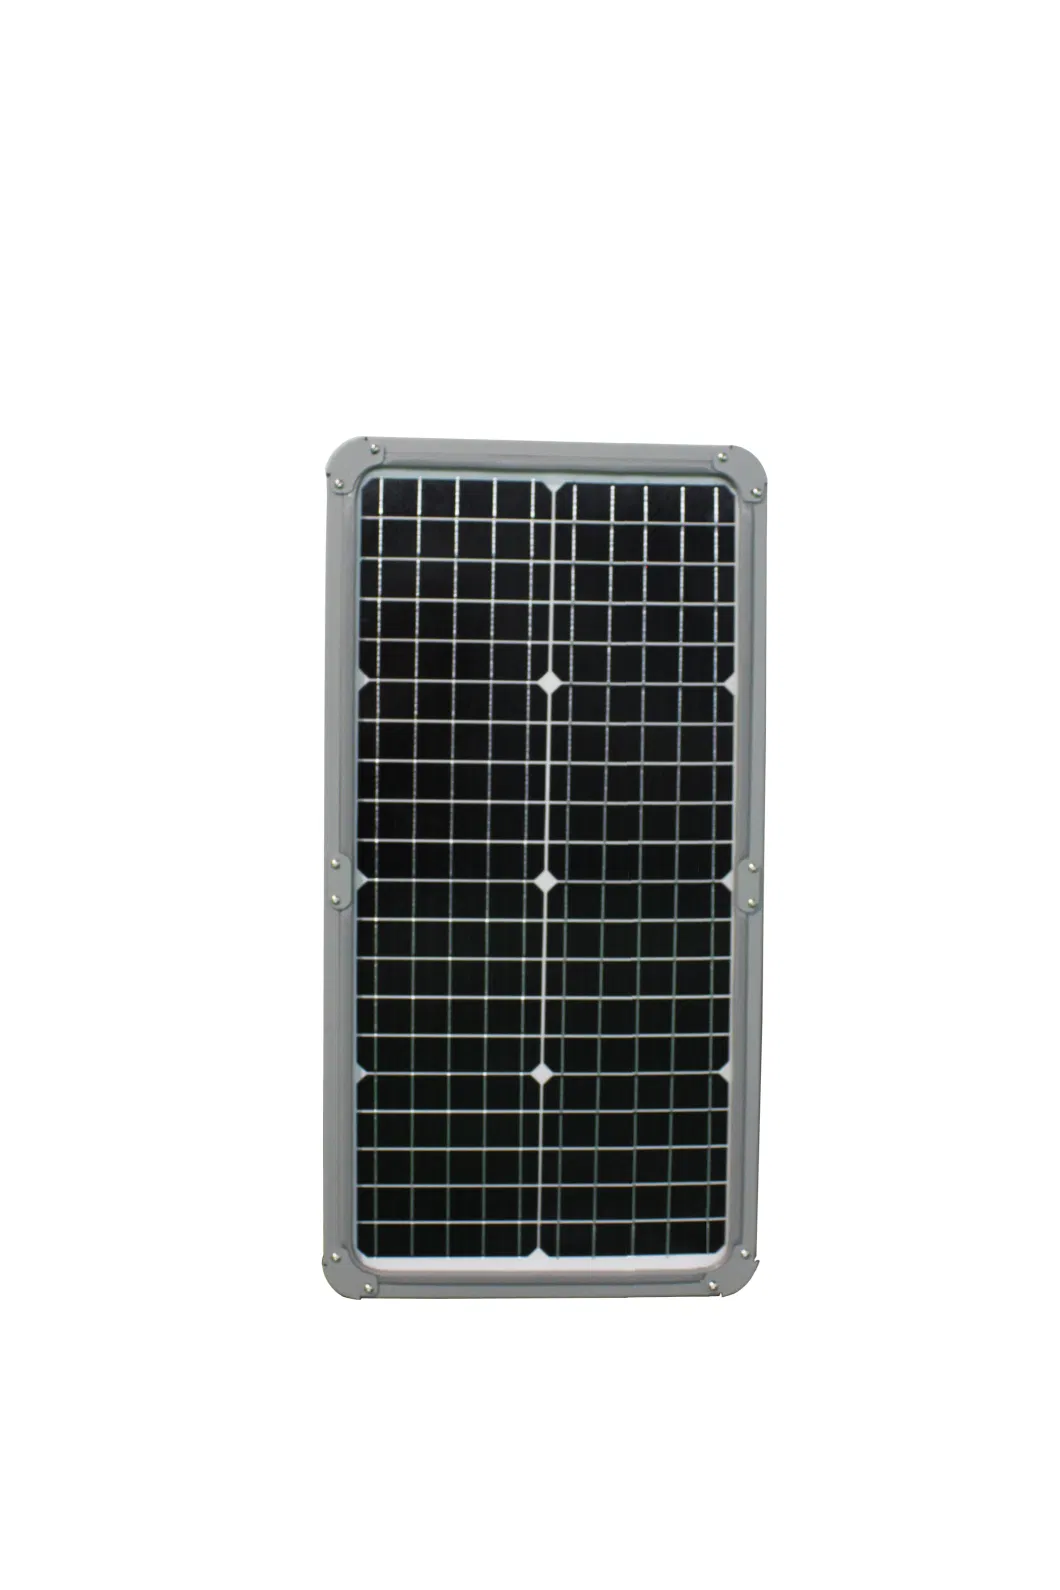 Best Price List Motion Sensor IP66 30W 40W 50W 60W 80W All in One Garden Outdoor Solar LED Street Light